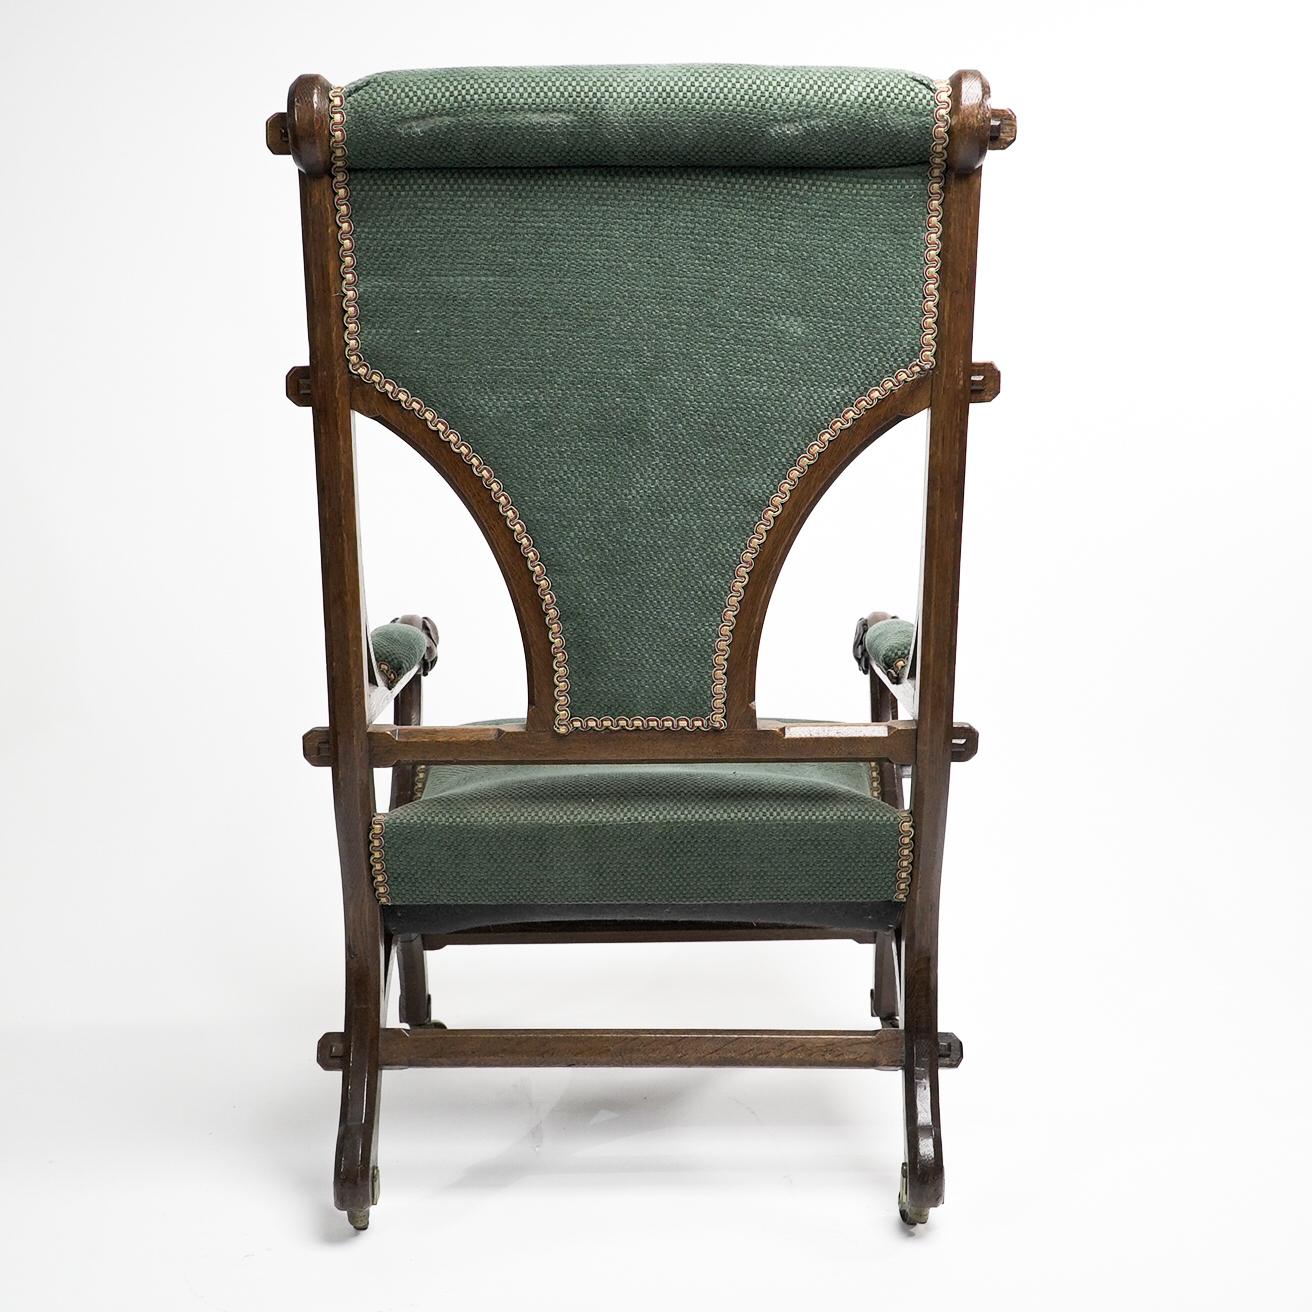 John Pollard Seddon Gothic Revival oak armchair with through pegged tenon joints For Sale 4